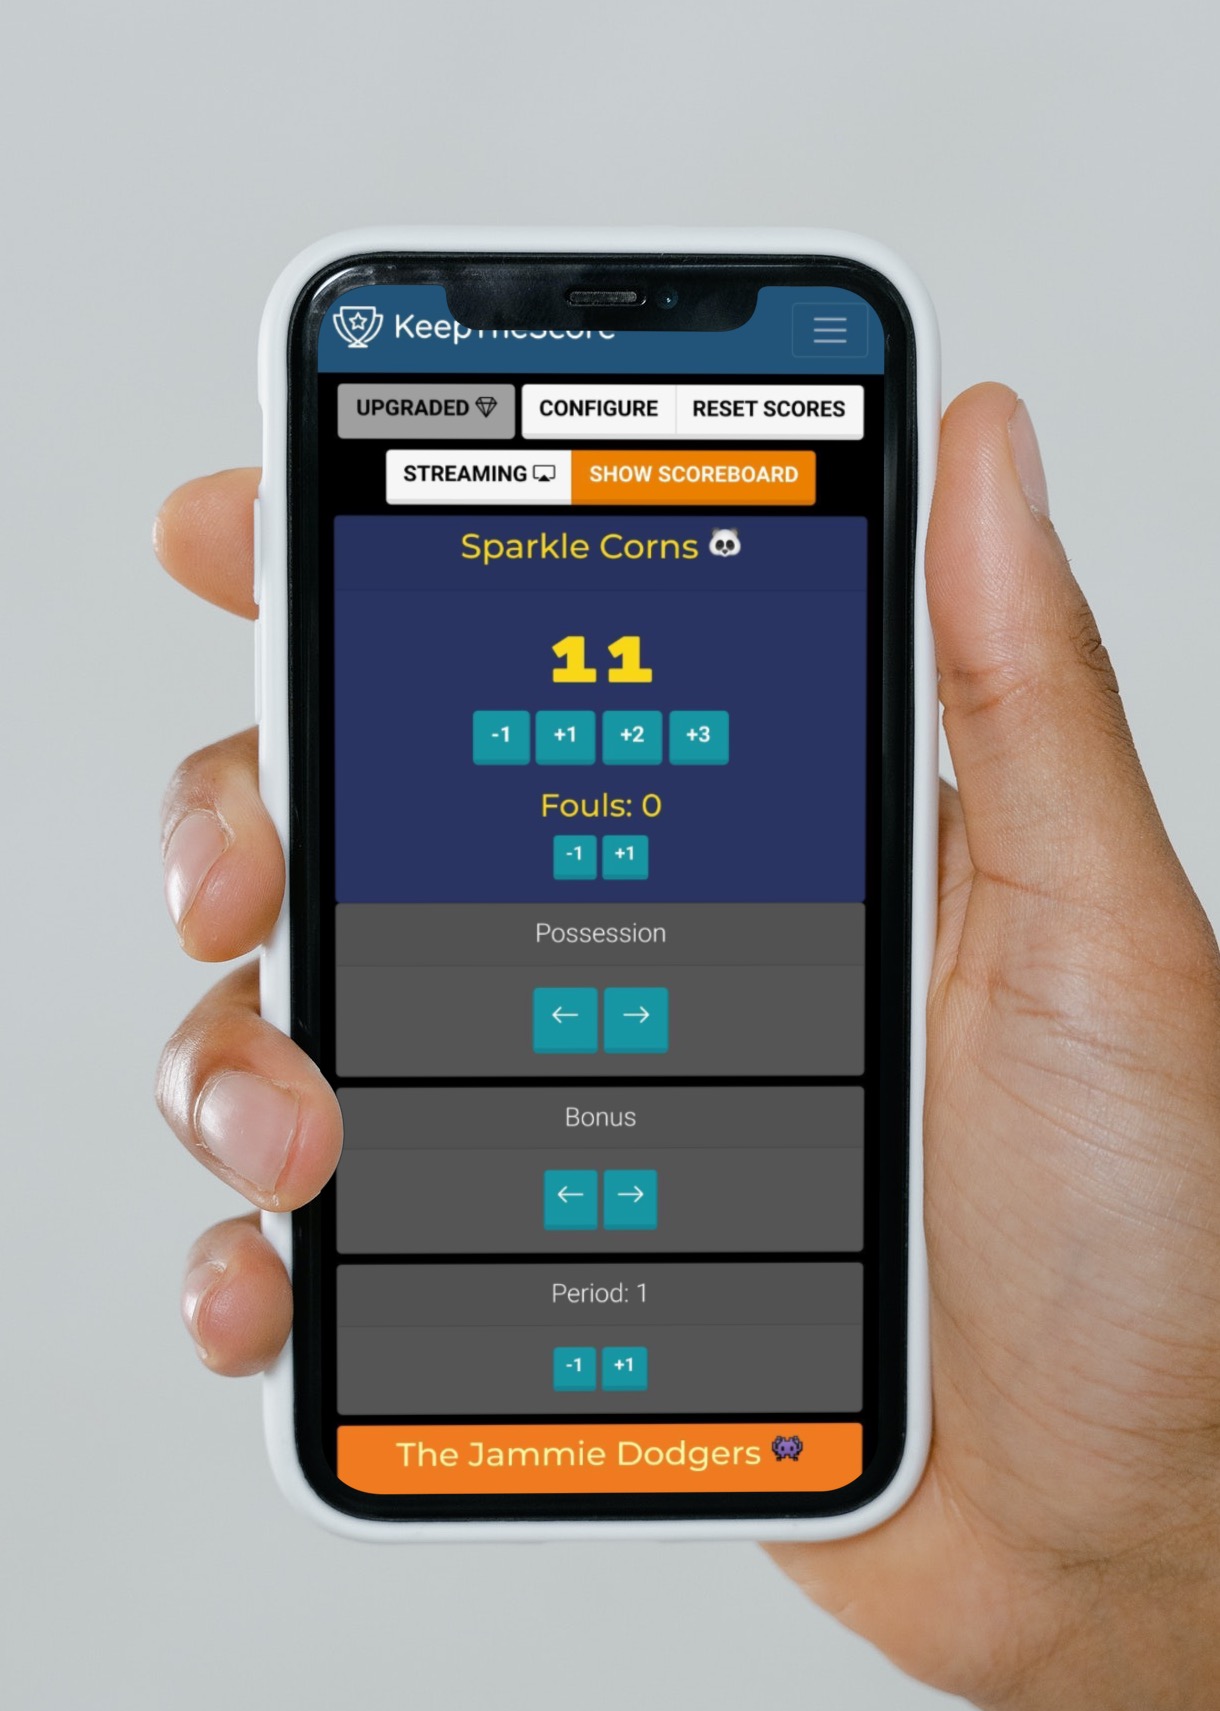 Controlling a scoreboard from a mobile phone using a scoreboard app